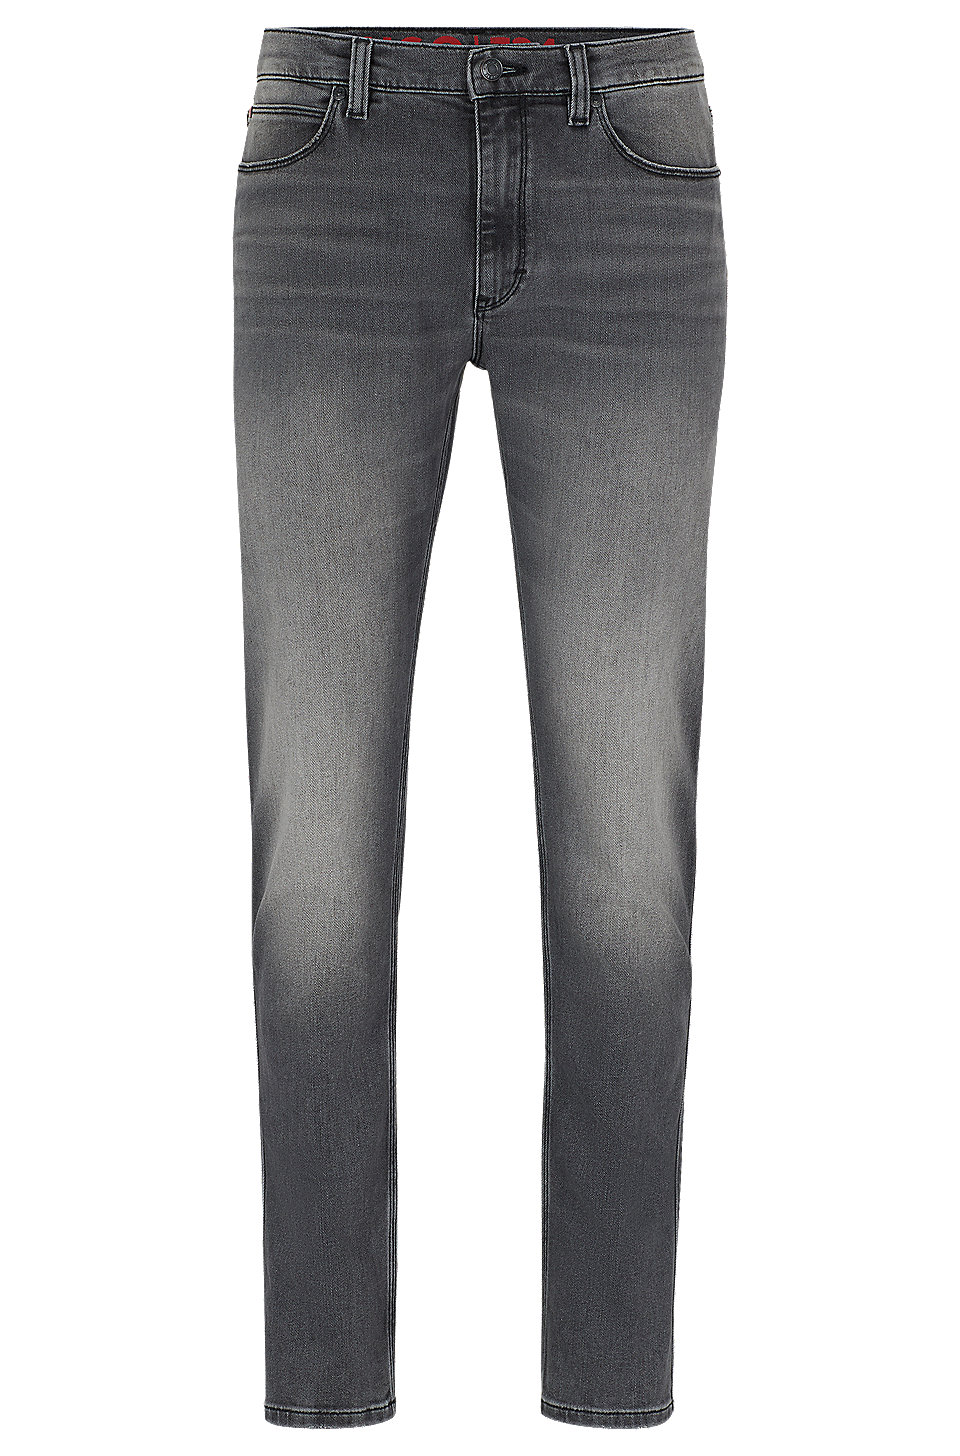 HUGO - Extra-slim-fit jeans in silver-wash stretch denim